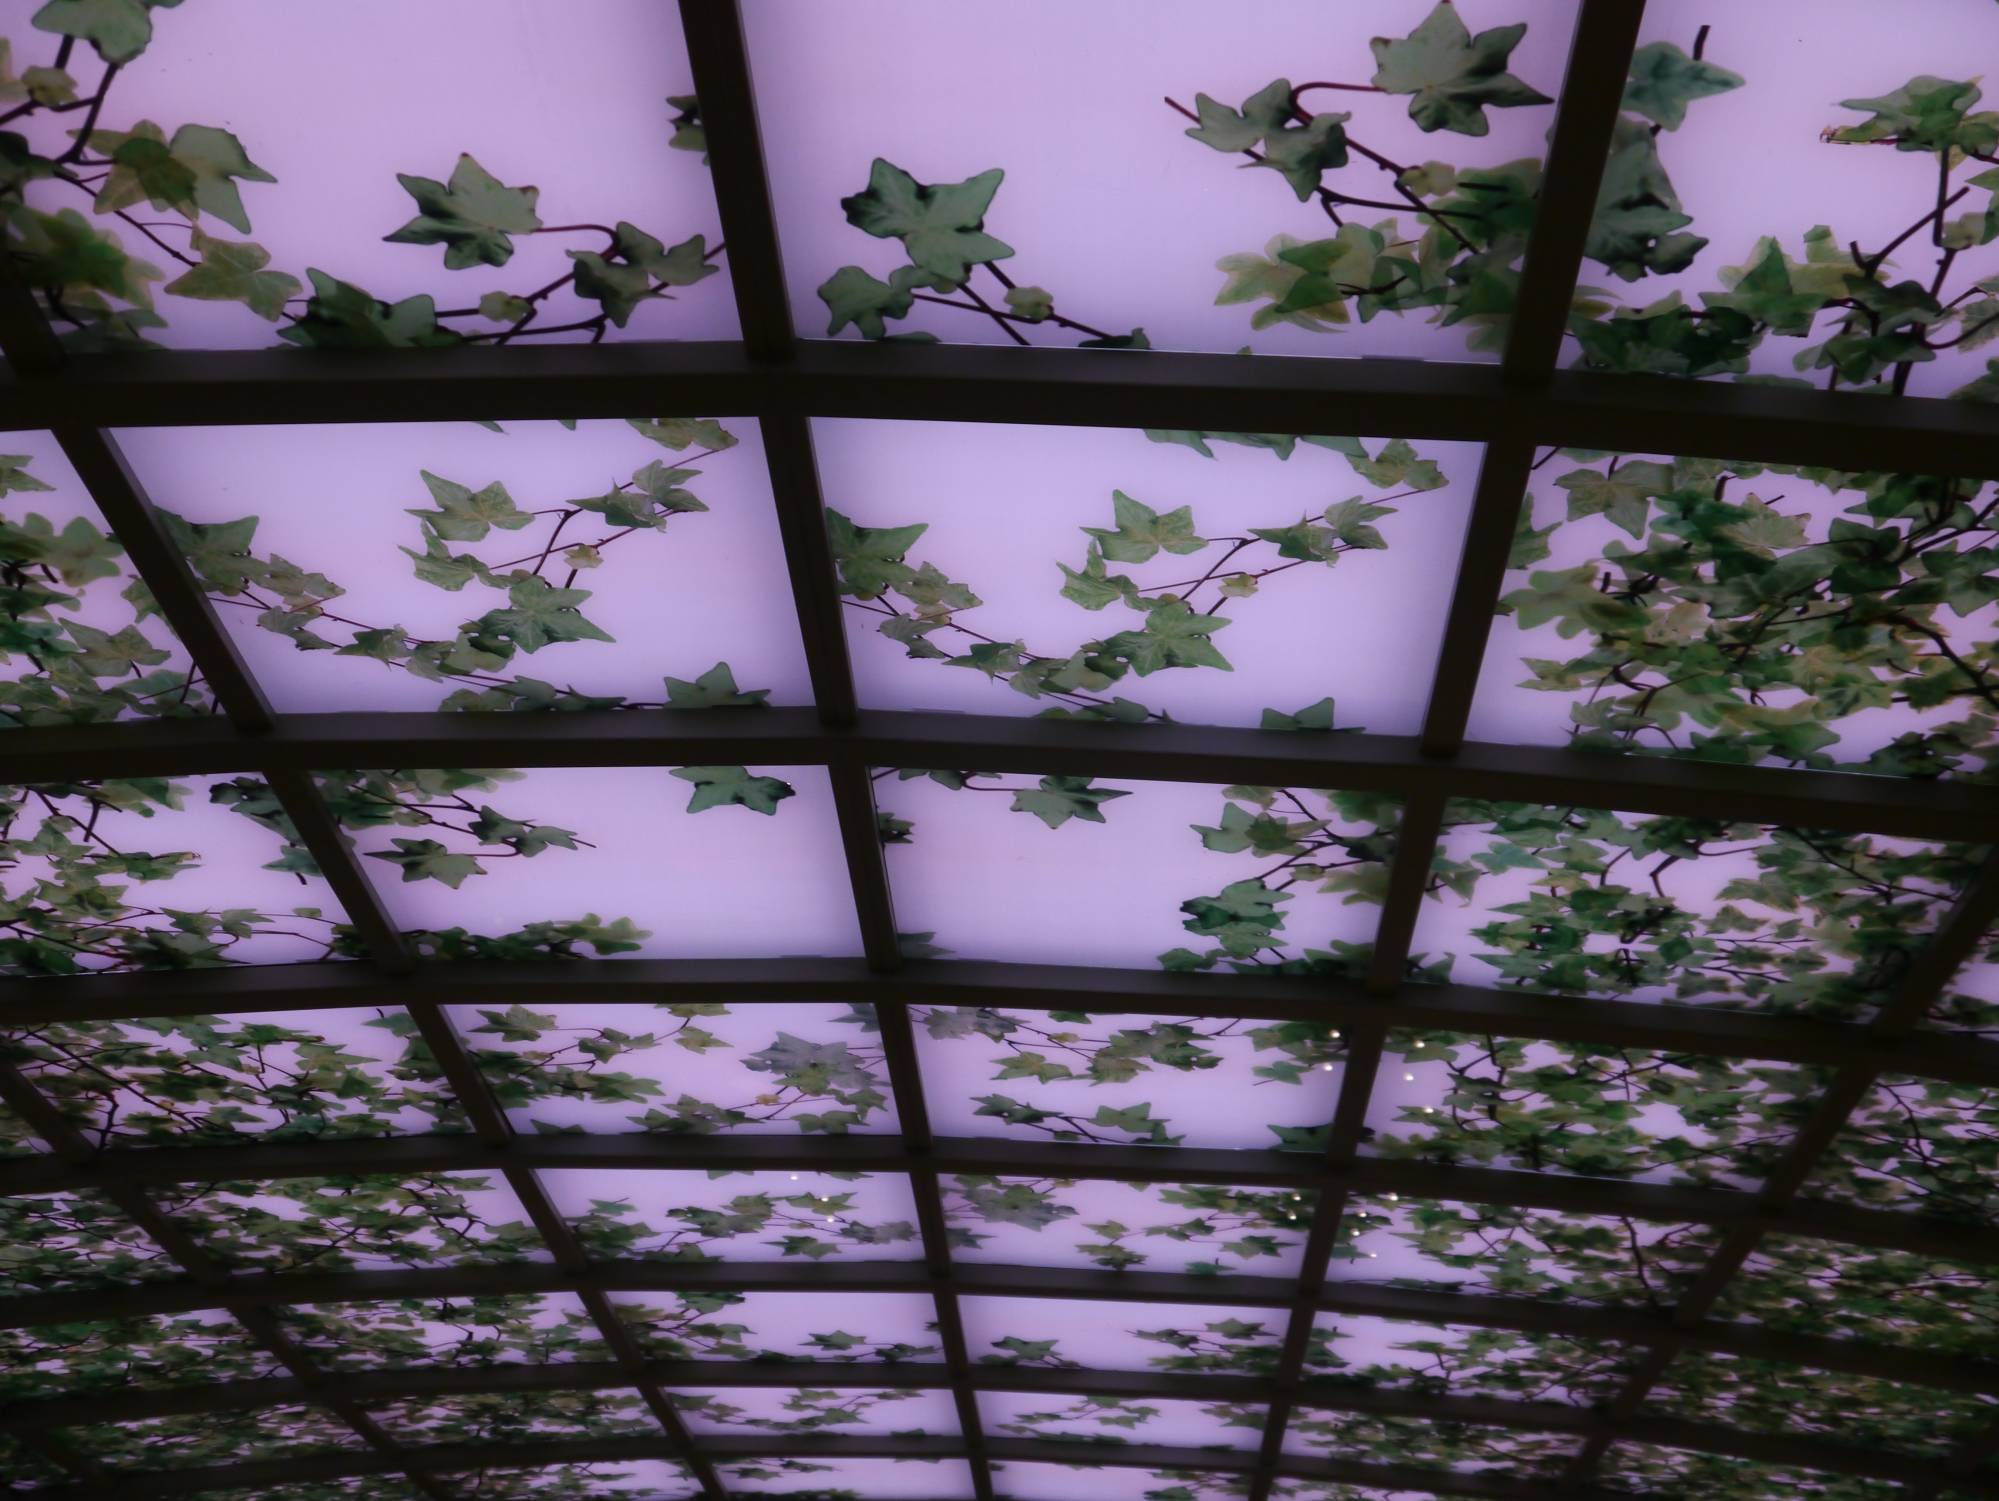 Disney Fantasy - Enchanted Garden ceiling